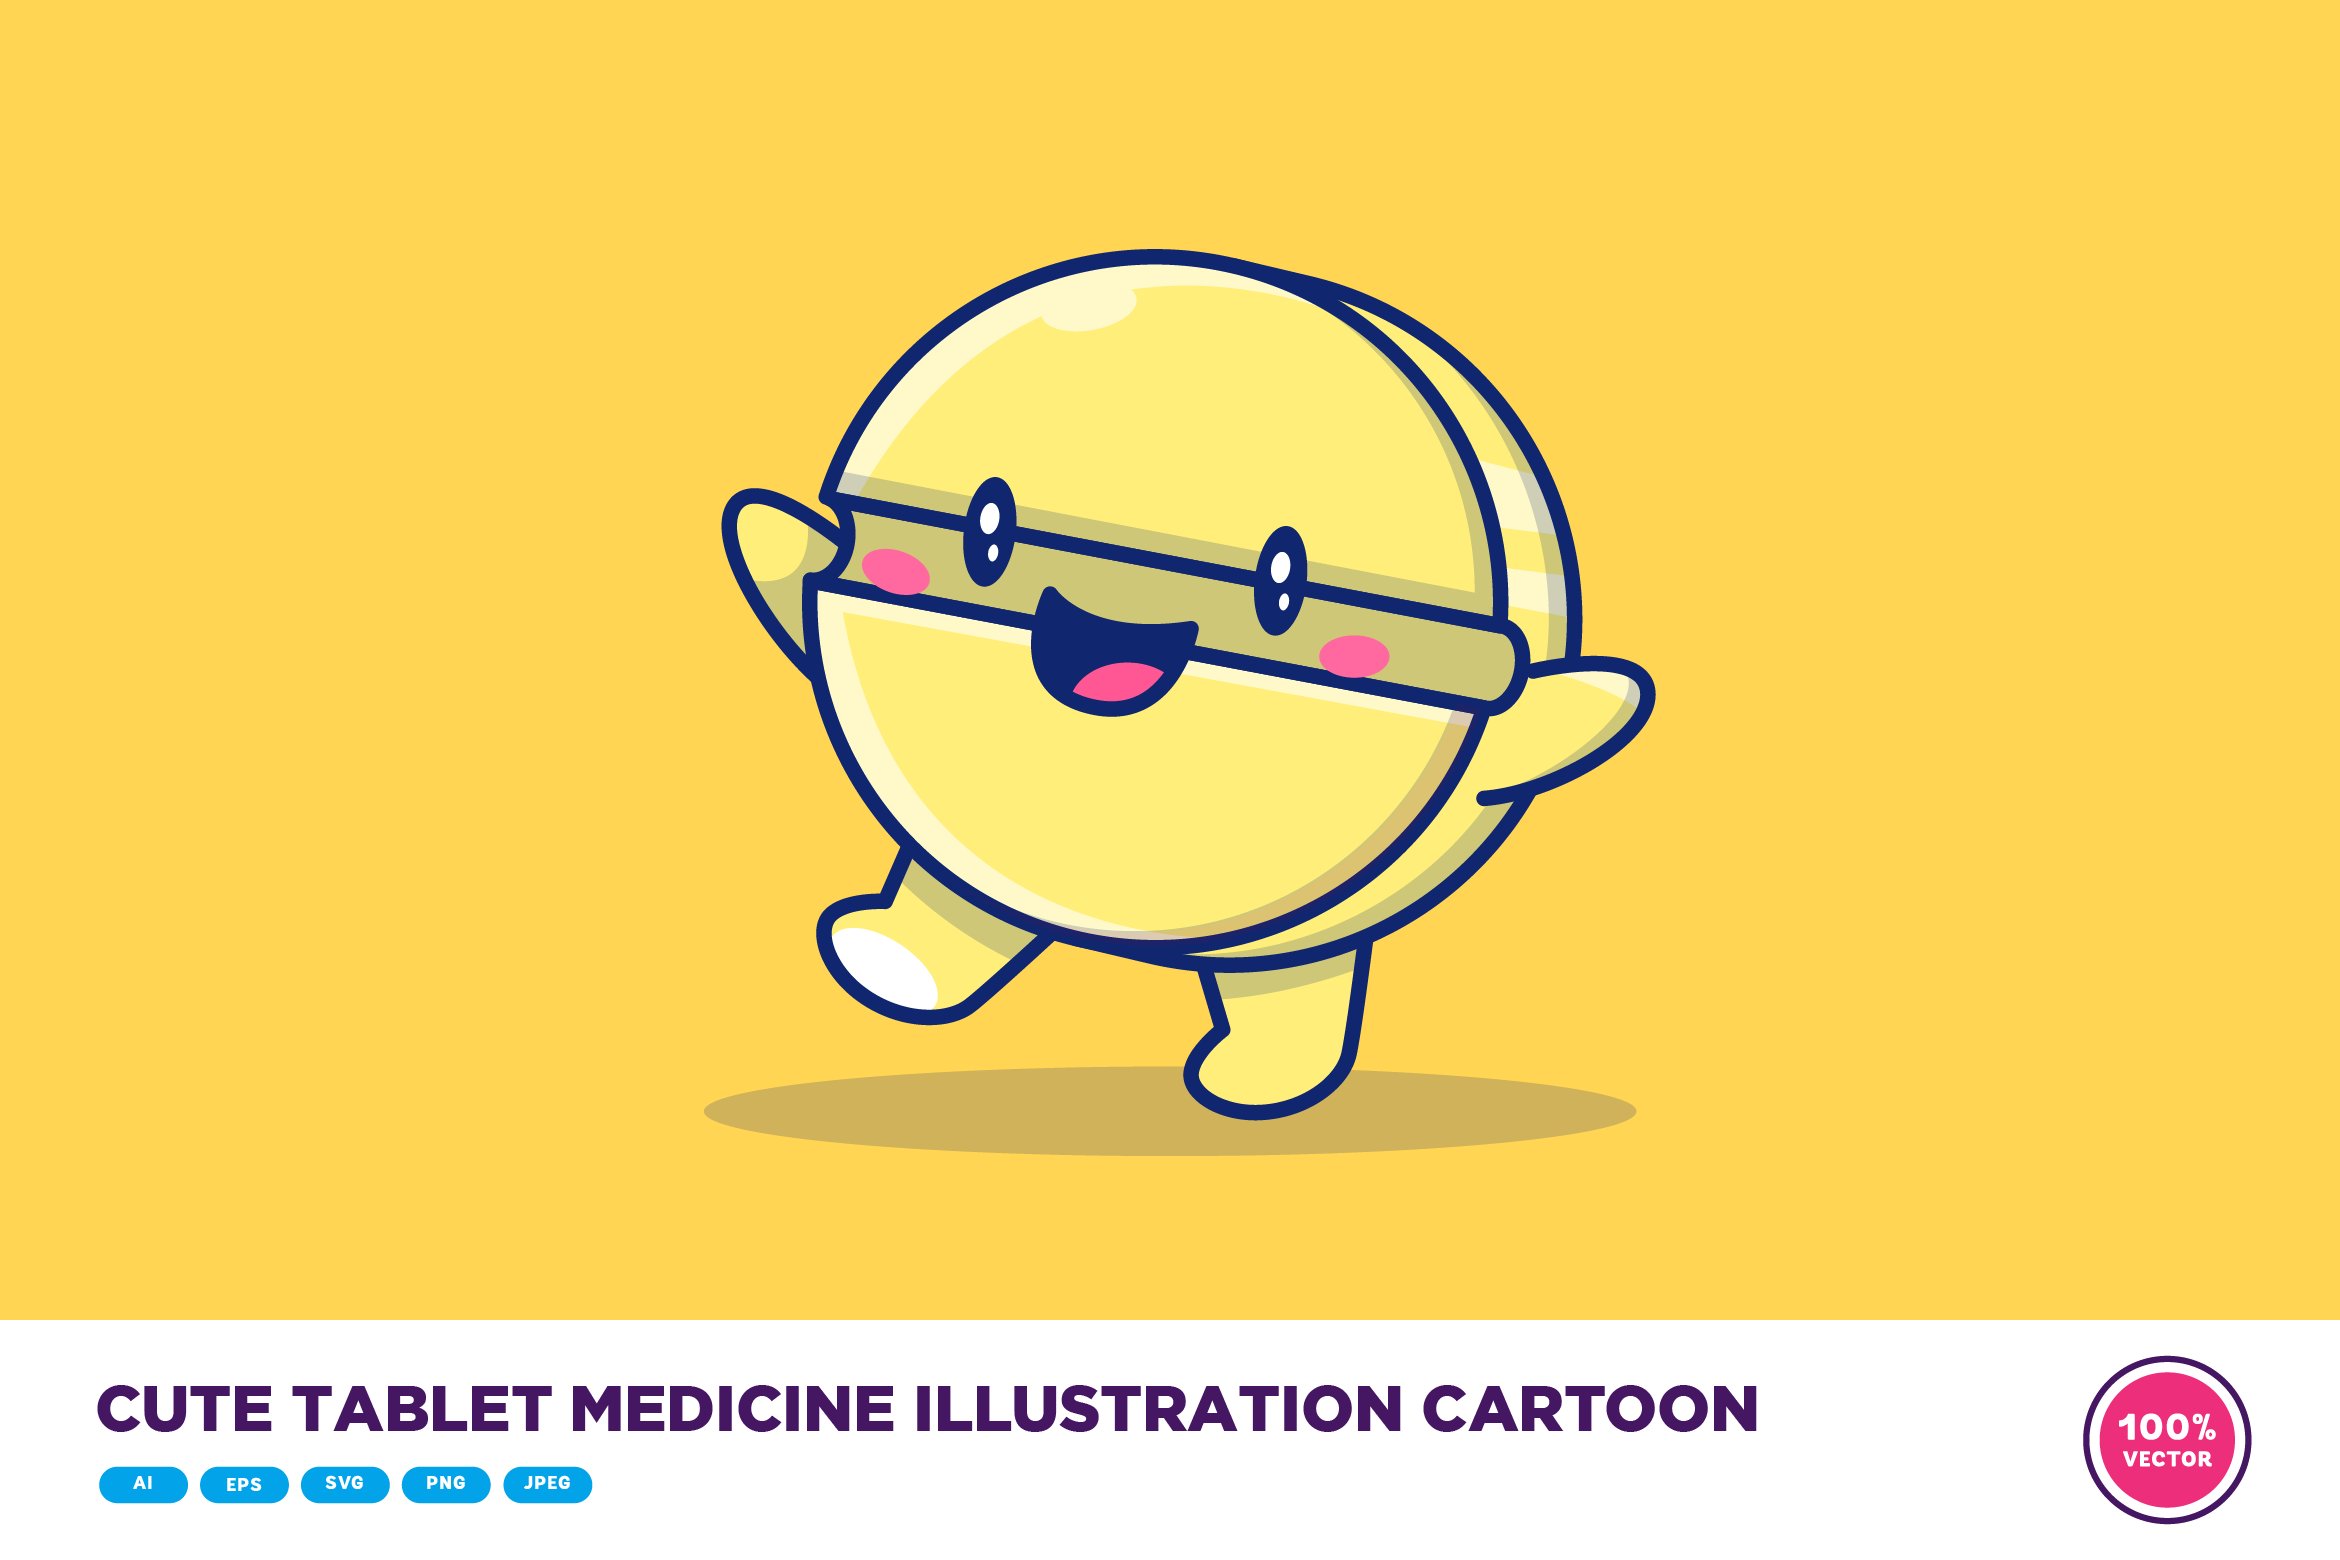 Cute Tablet Medicine Illustration cover image.